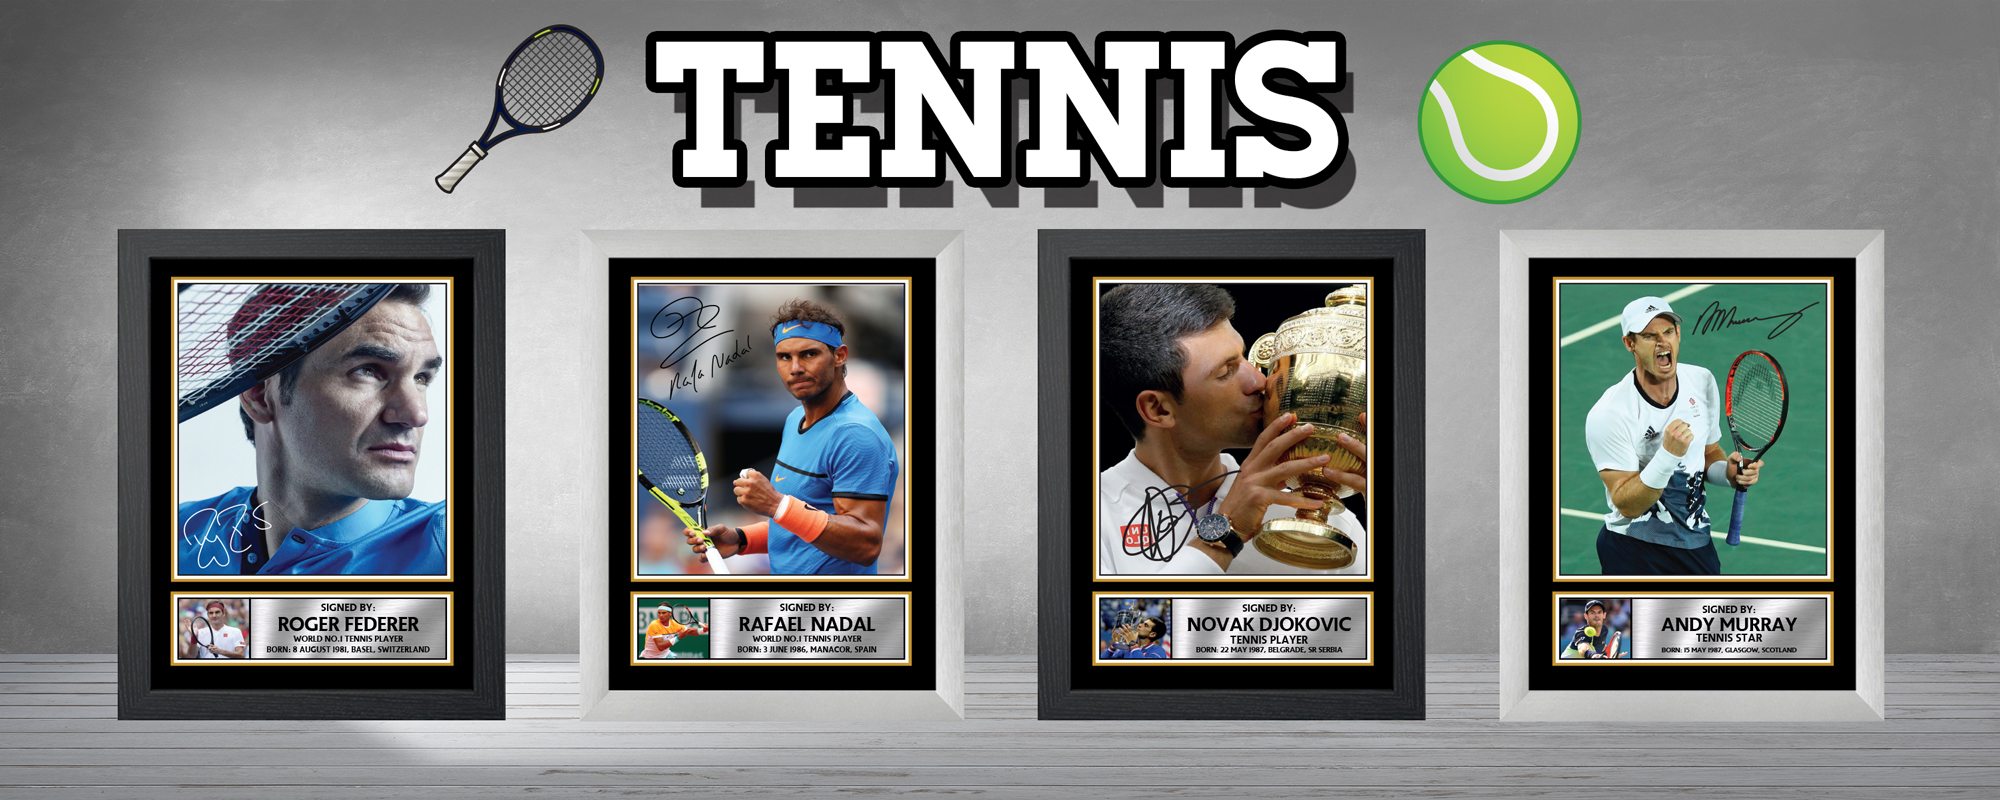 tennis-banner.jpg